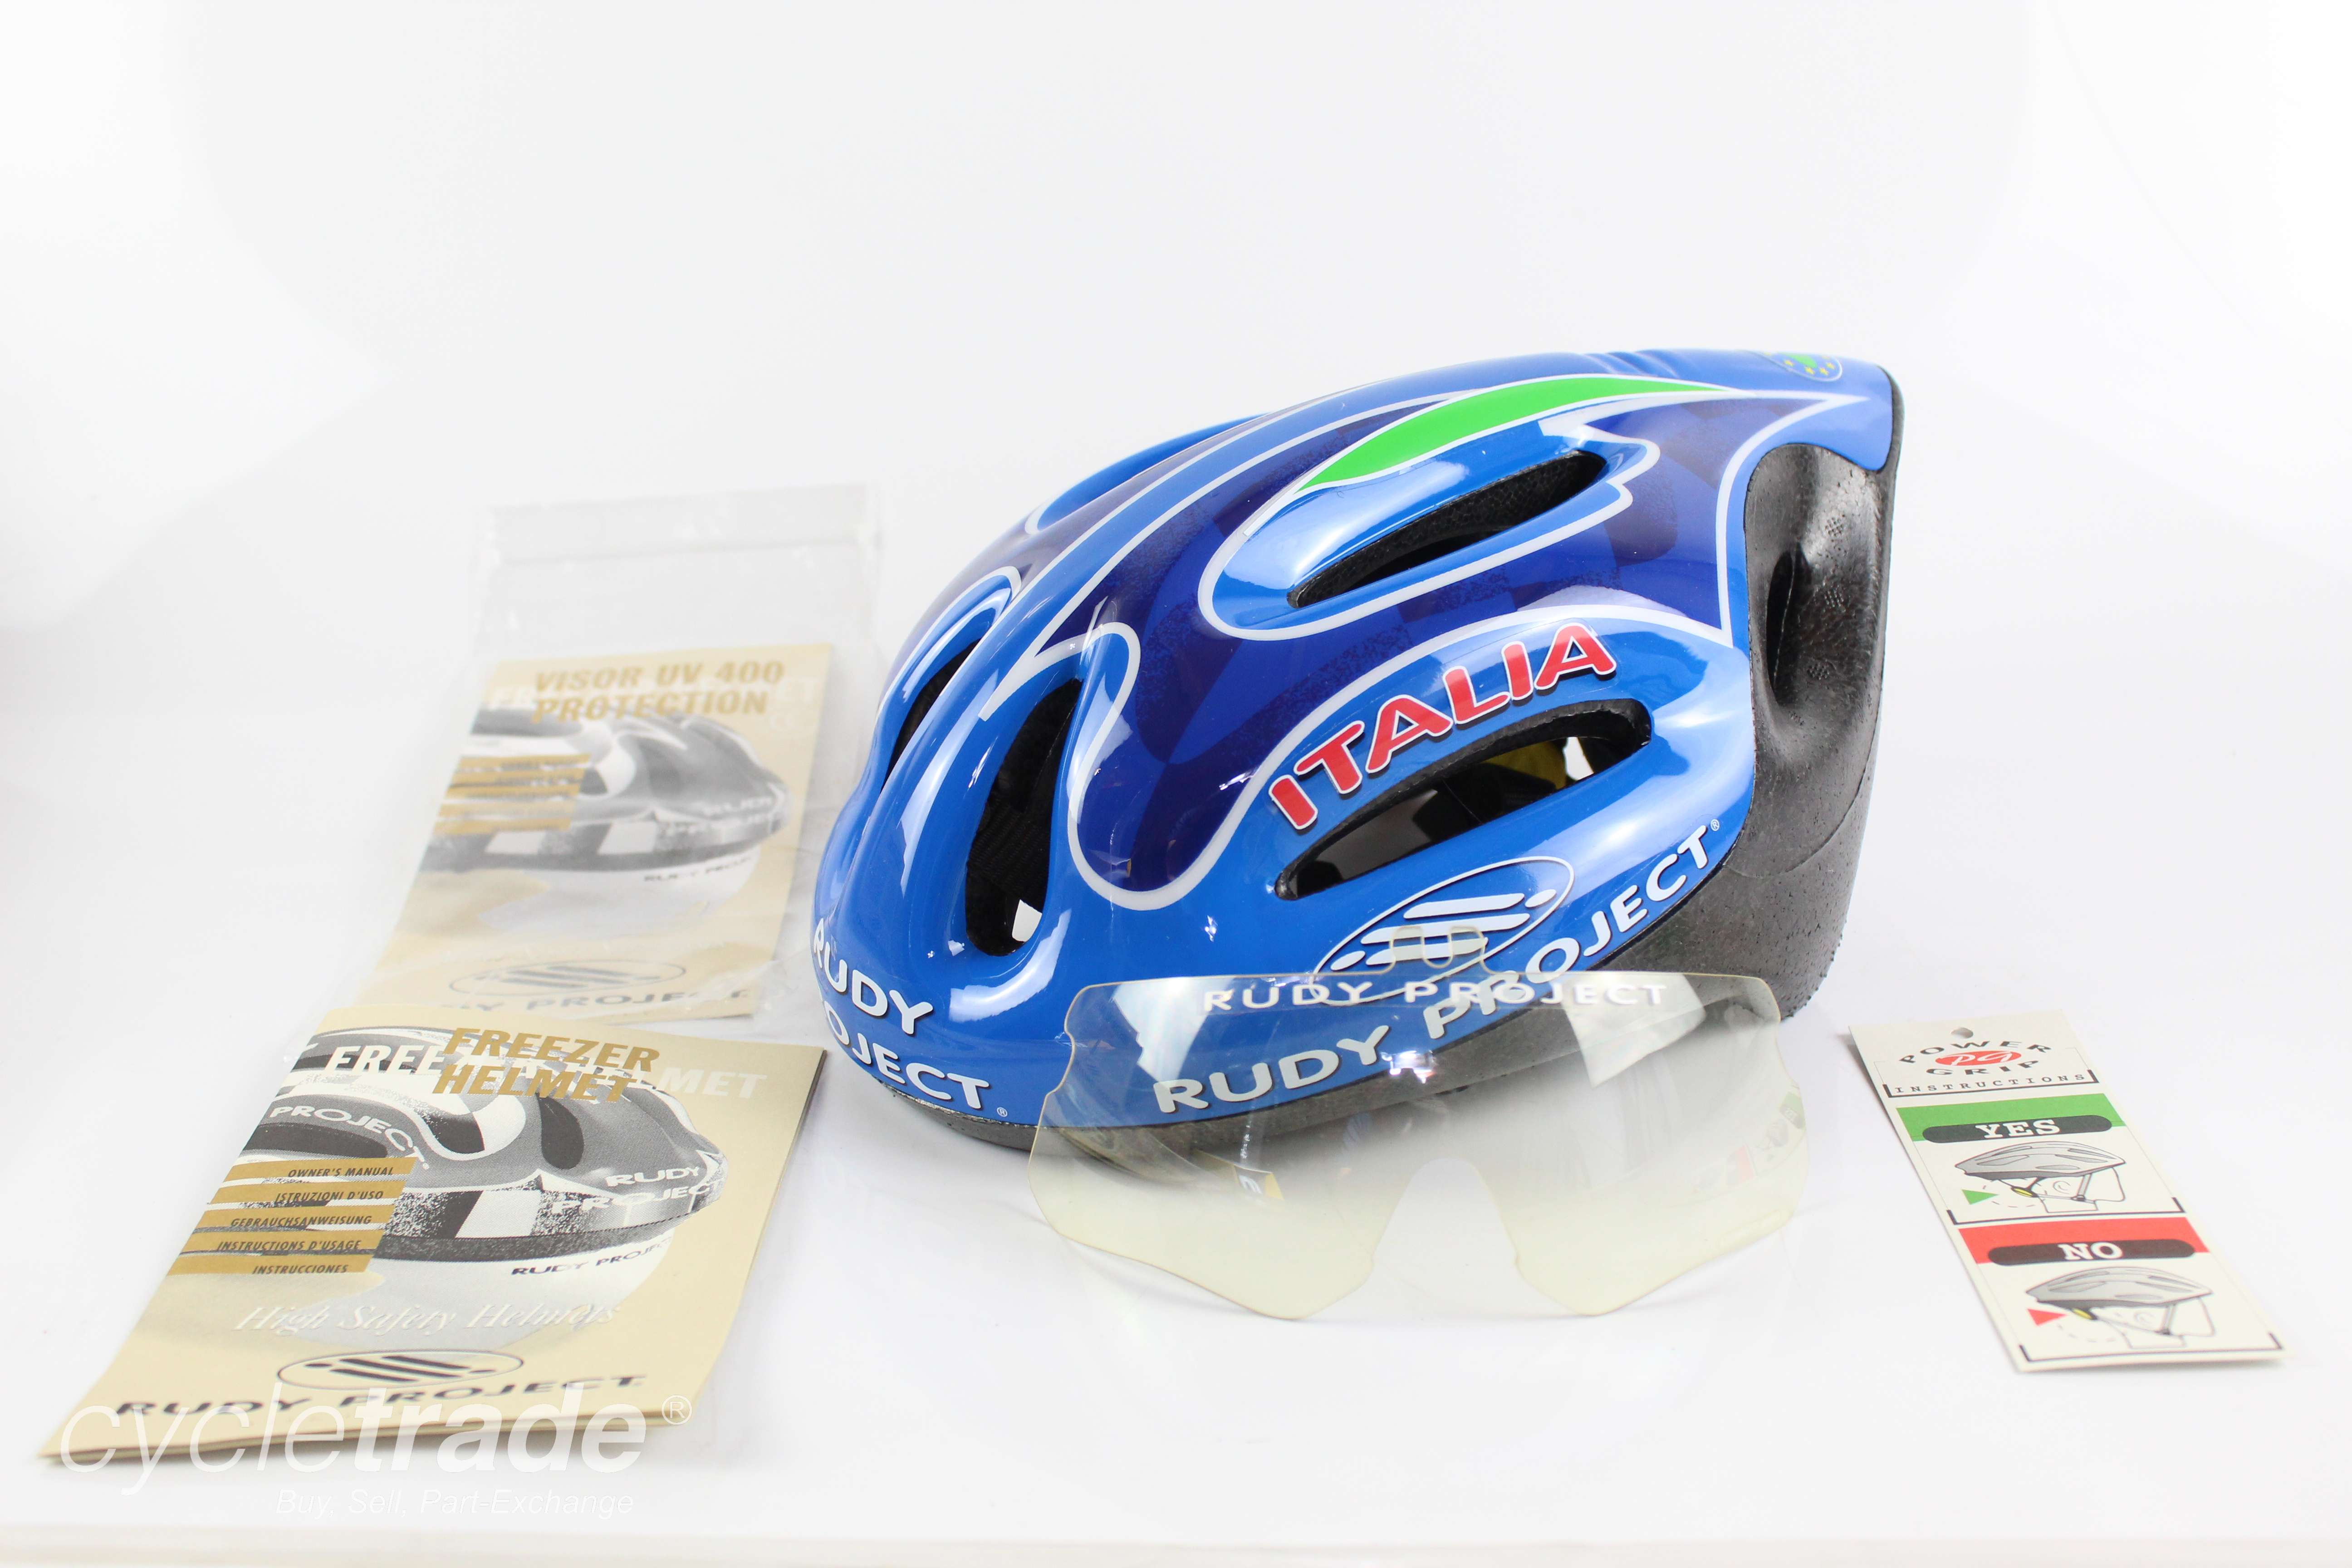 Retro Helmet -Rudy Project Freezer Fuego Italia M 55-57cm- Grade A+